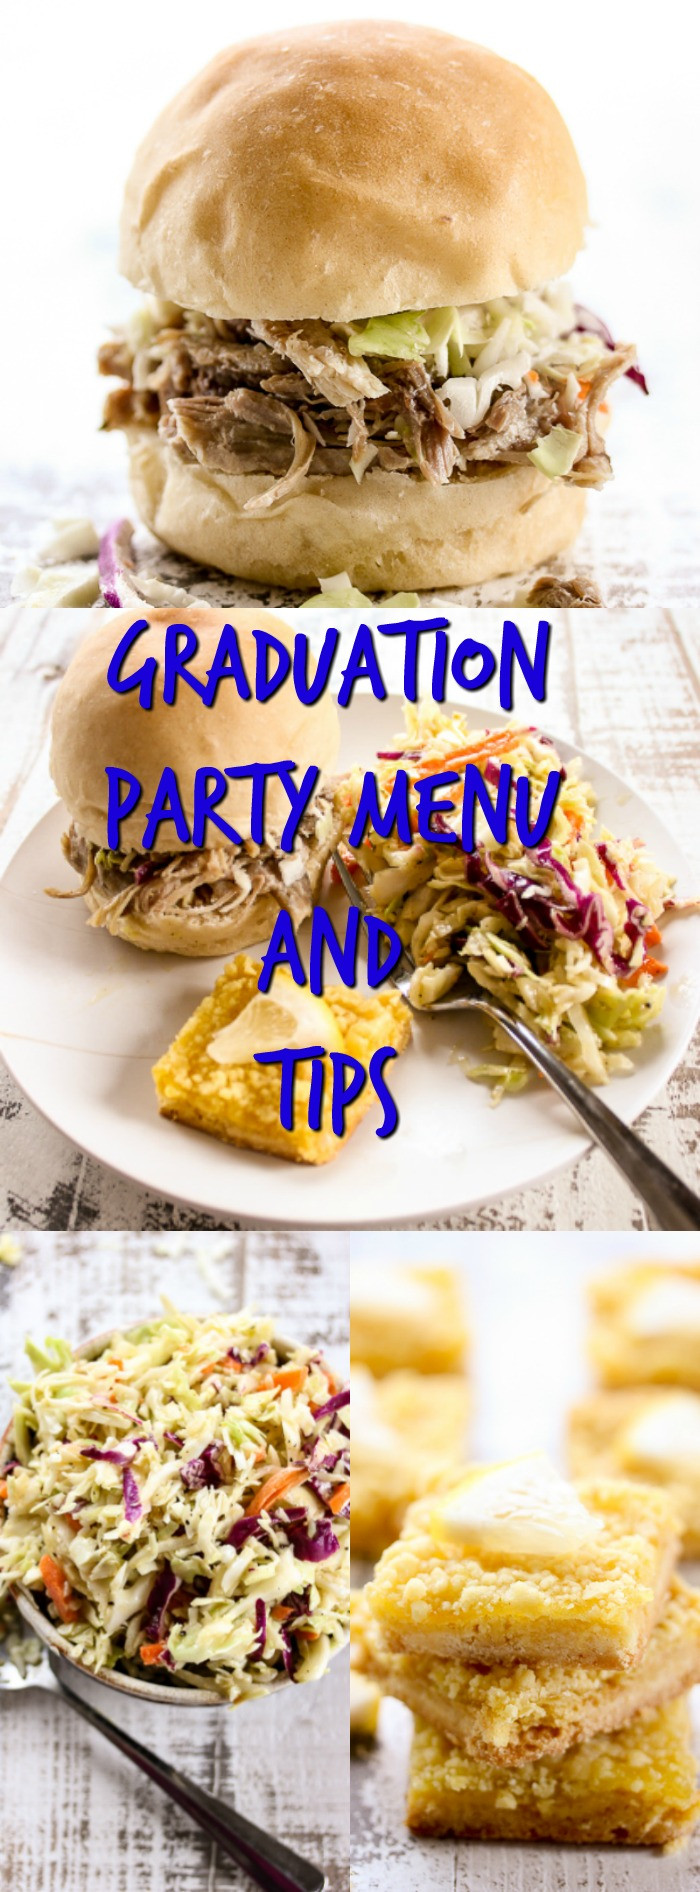 Graduation Party Menu Ideas
 Graduation Party Menu and Tips Lisa s Dinnertime Dish